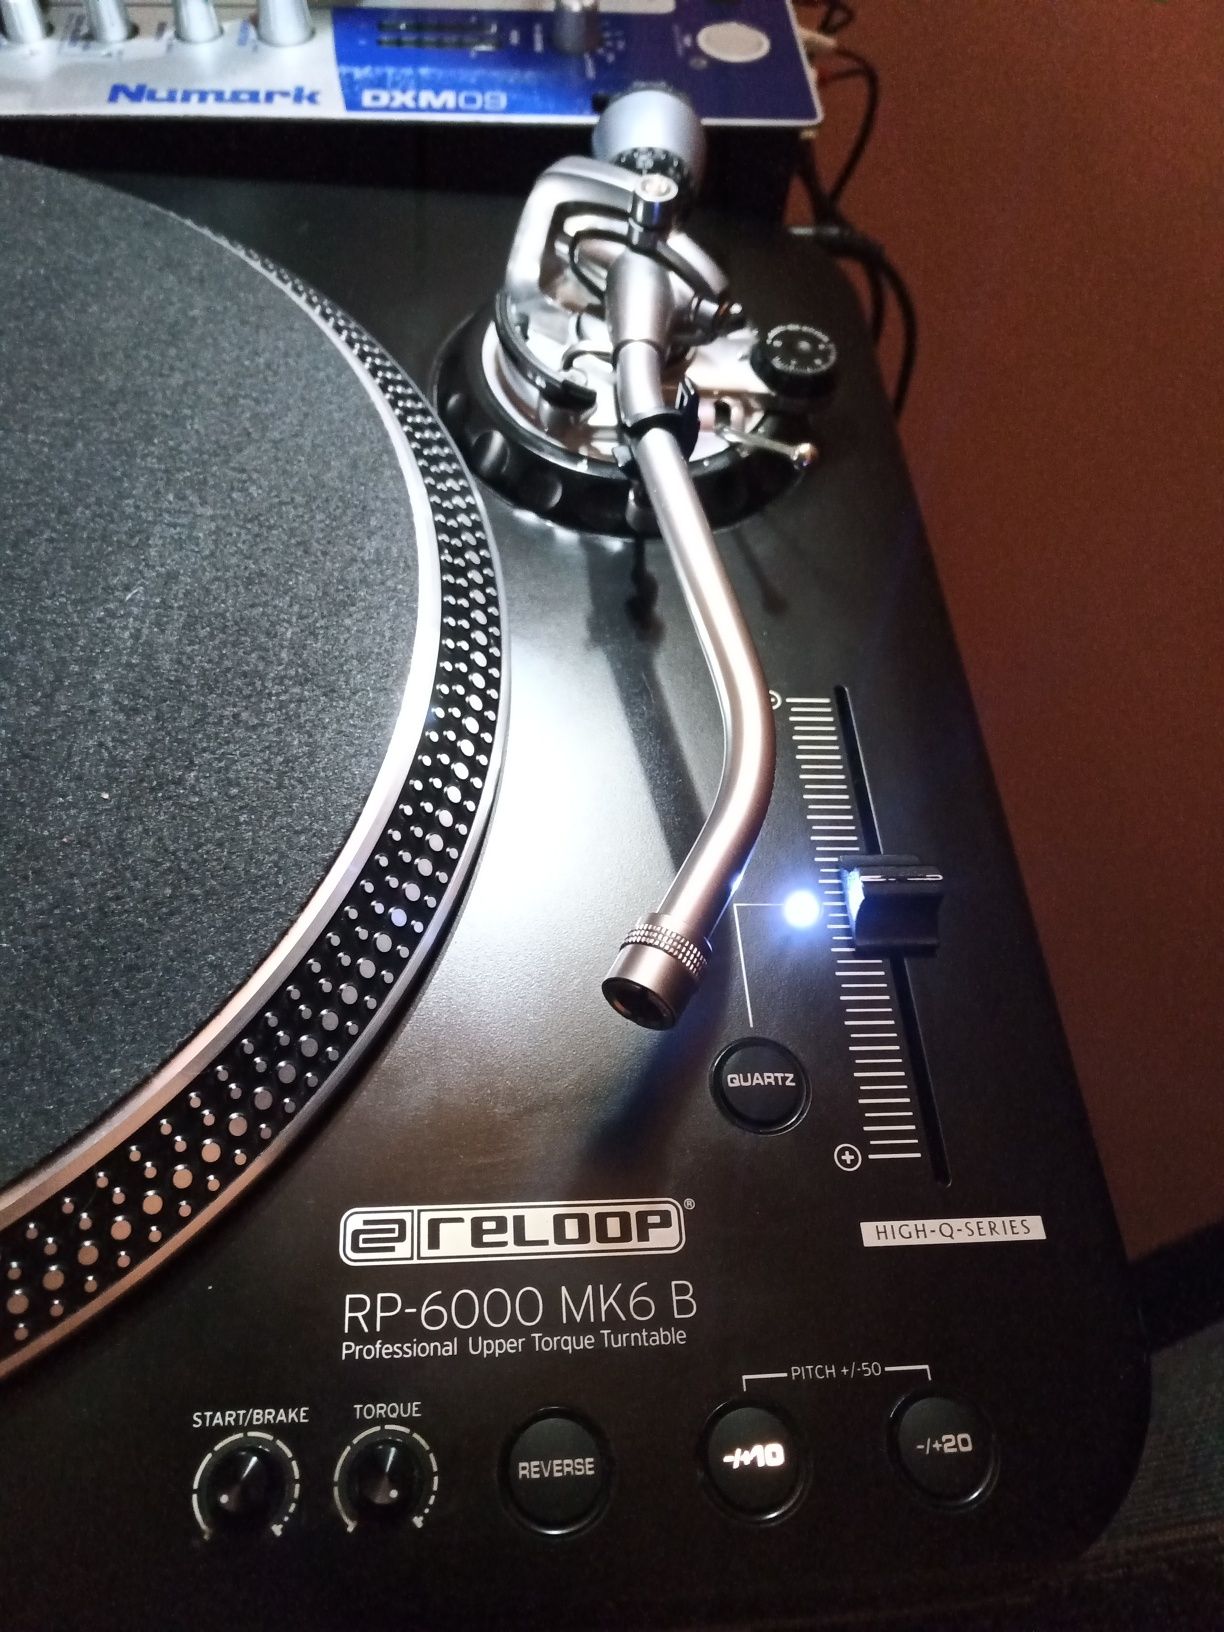 Gramofon Dj. RELOOP RP-6000 MK6 B wysyłka gratis